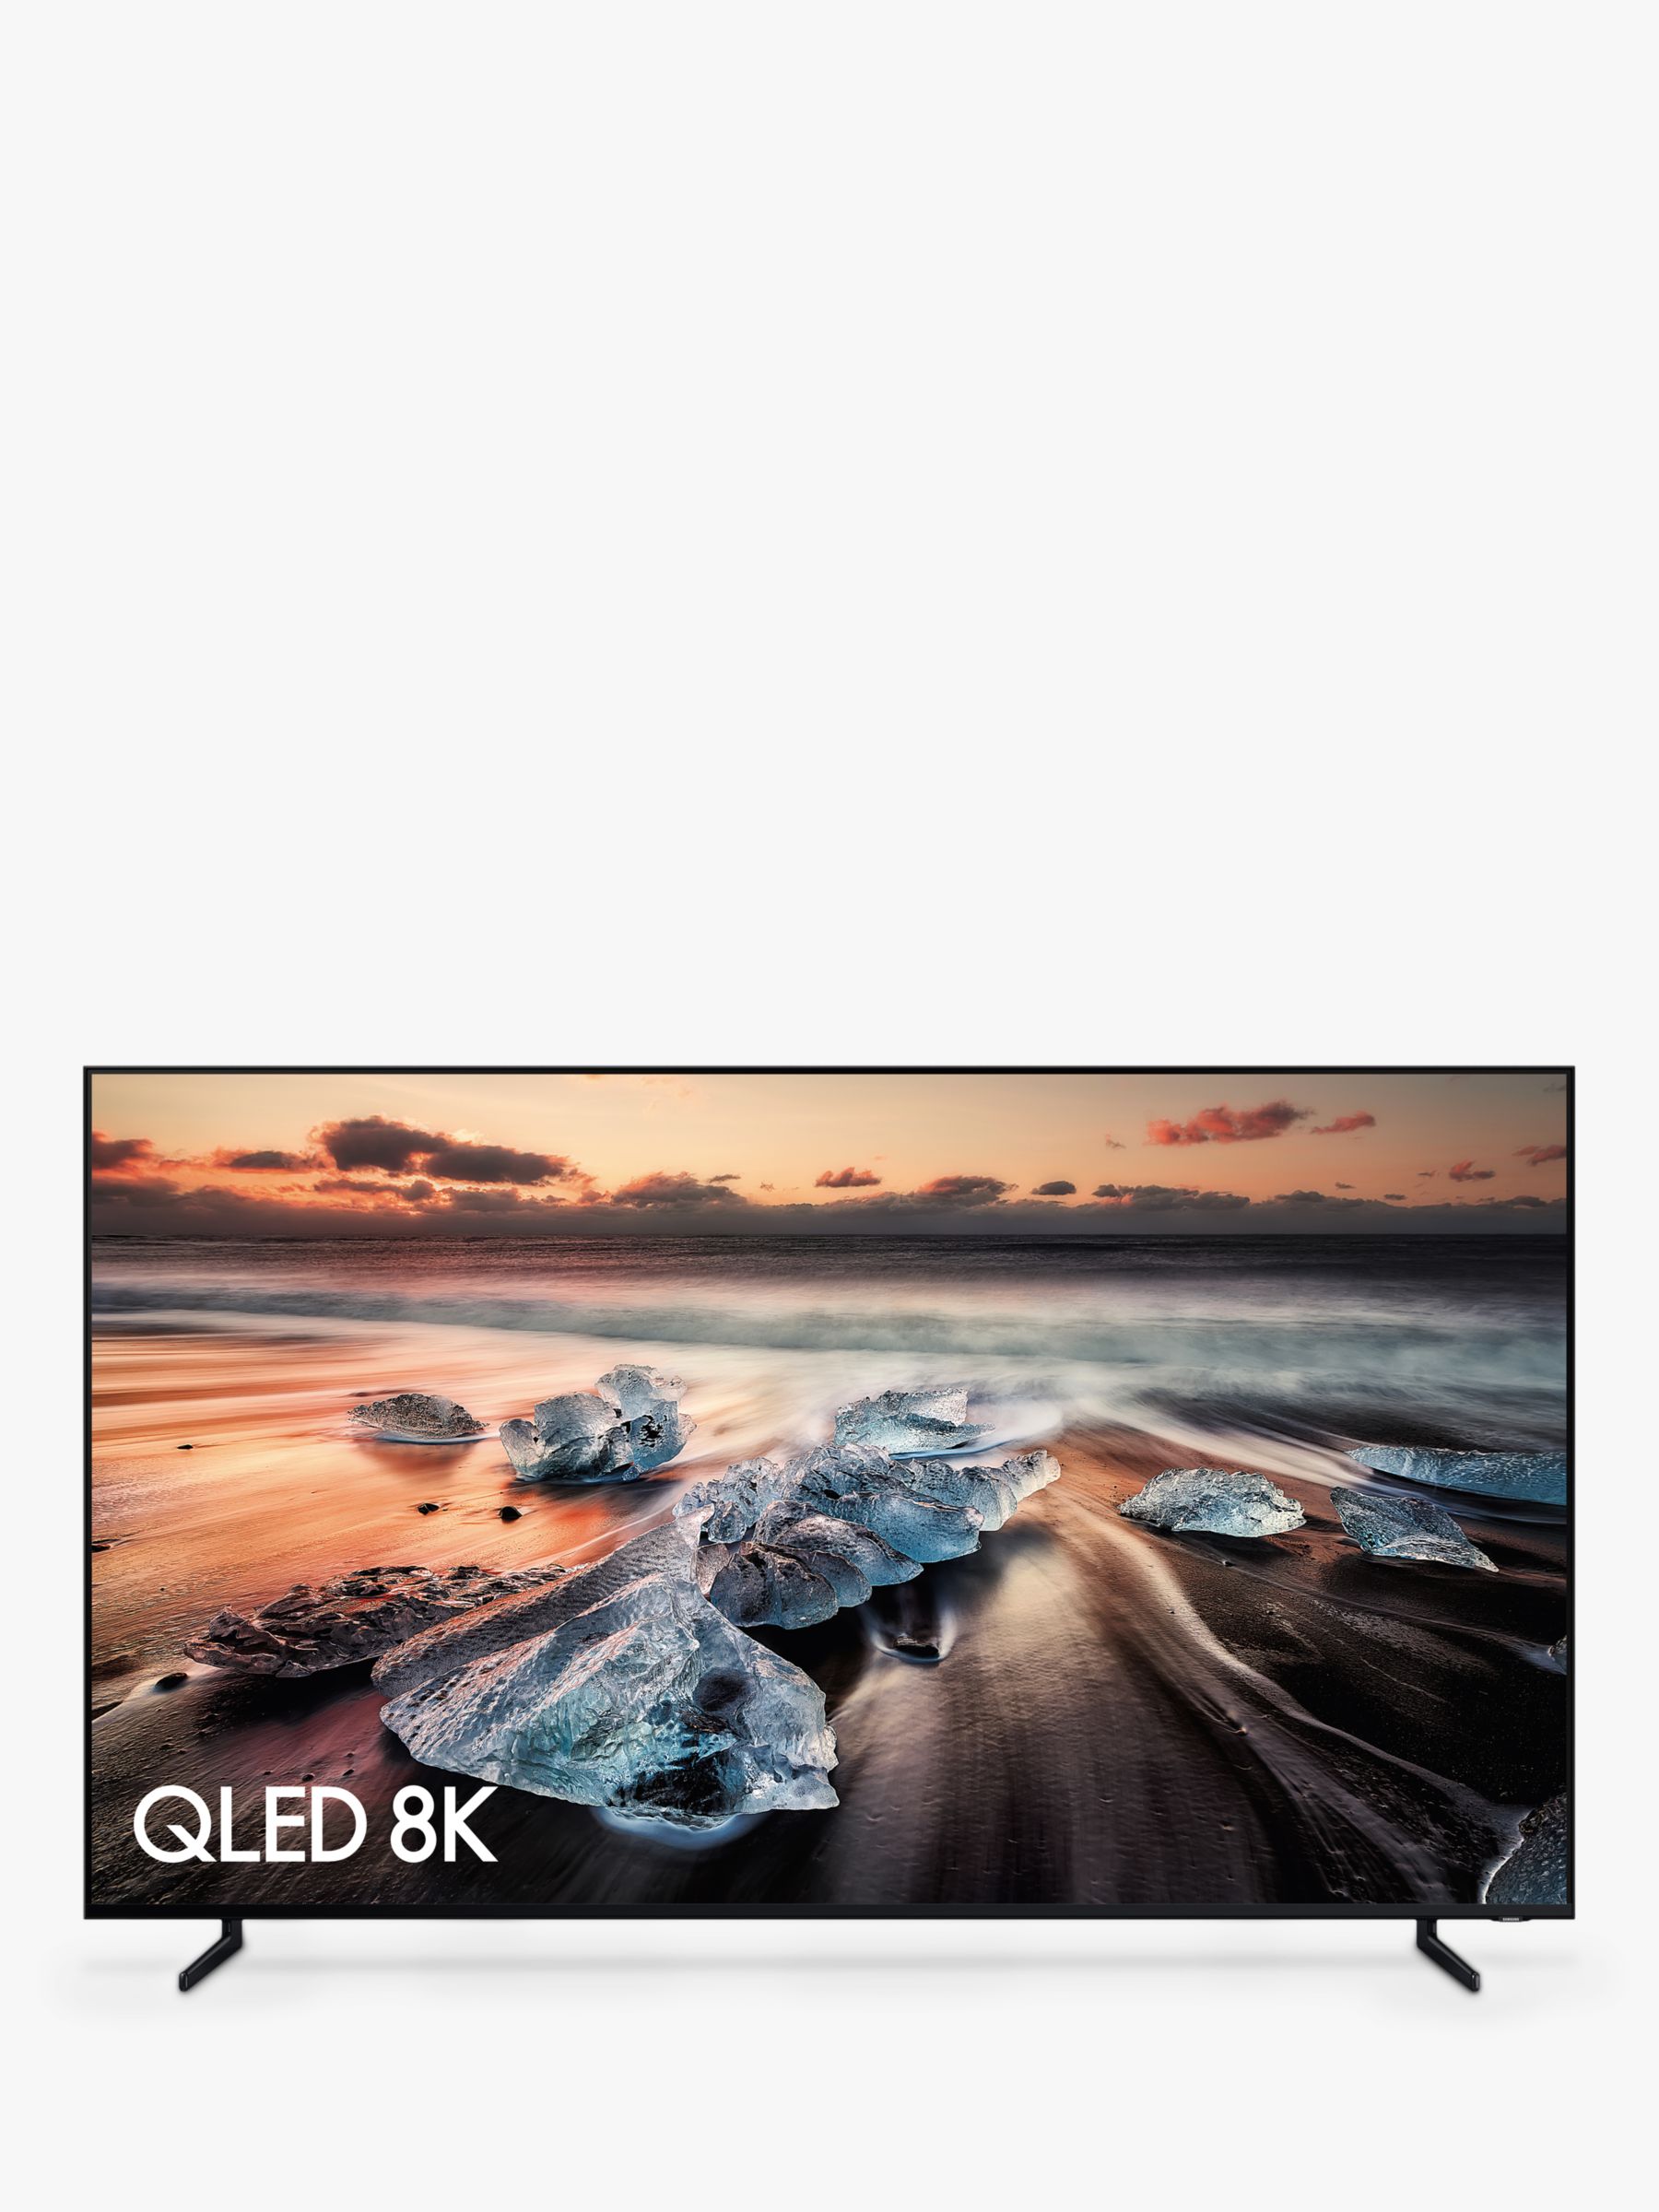 Samsung QE75Q900R (2018) QLED HDR 4000 8K Ultra HD Smart TV, 75 with TVPlus/Freesat HD & 360 Design, Black